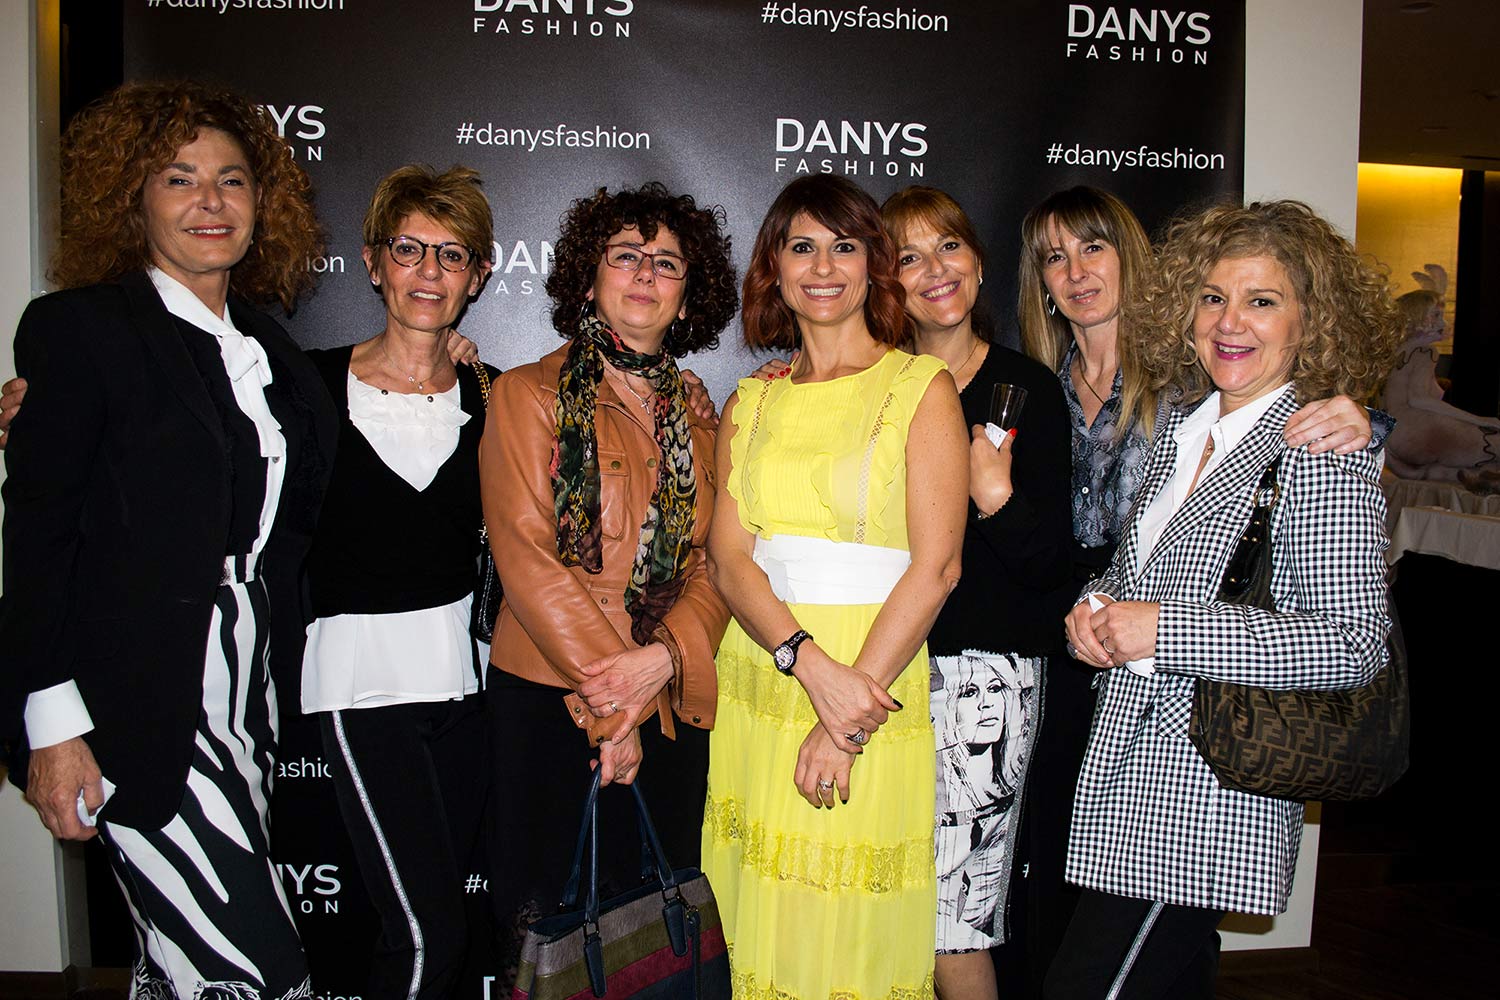 Danys Fashion red carpet evento